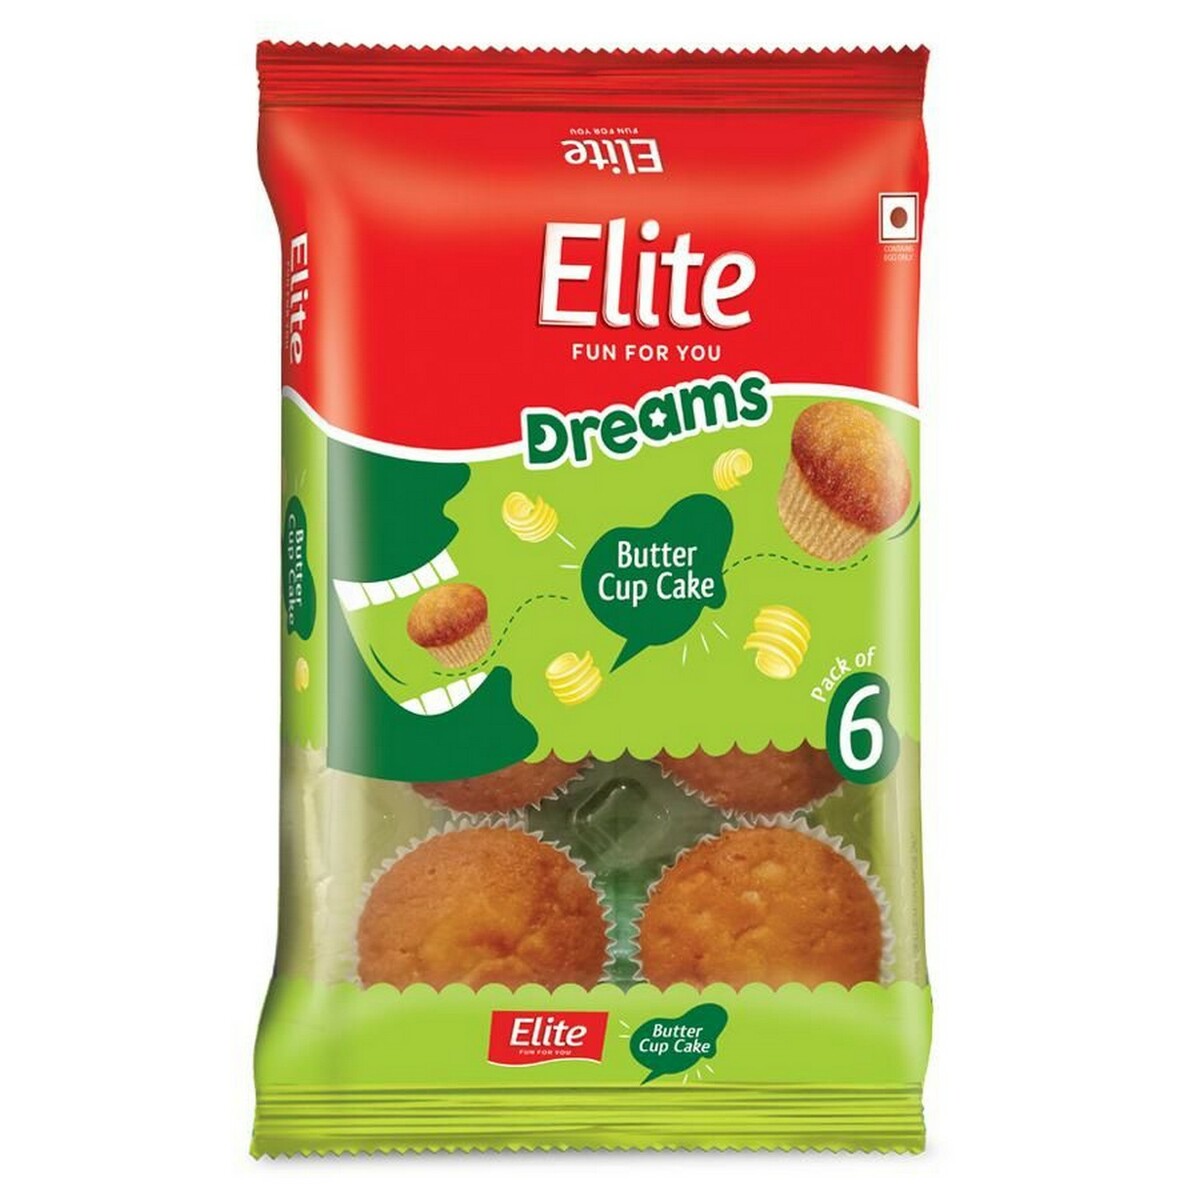 Elite Dreams Butter Cake 6's